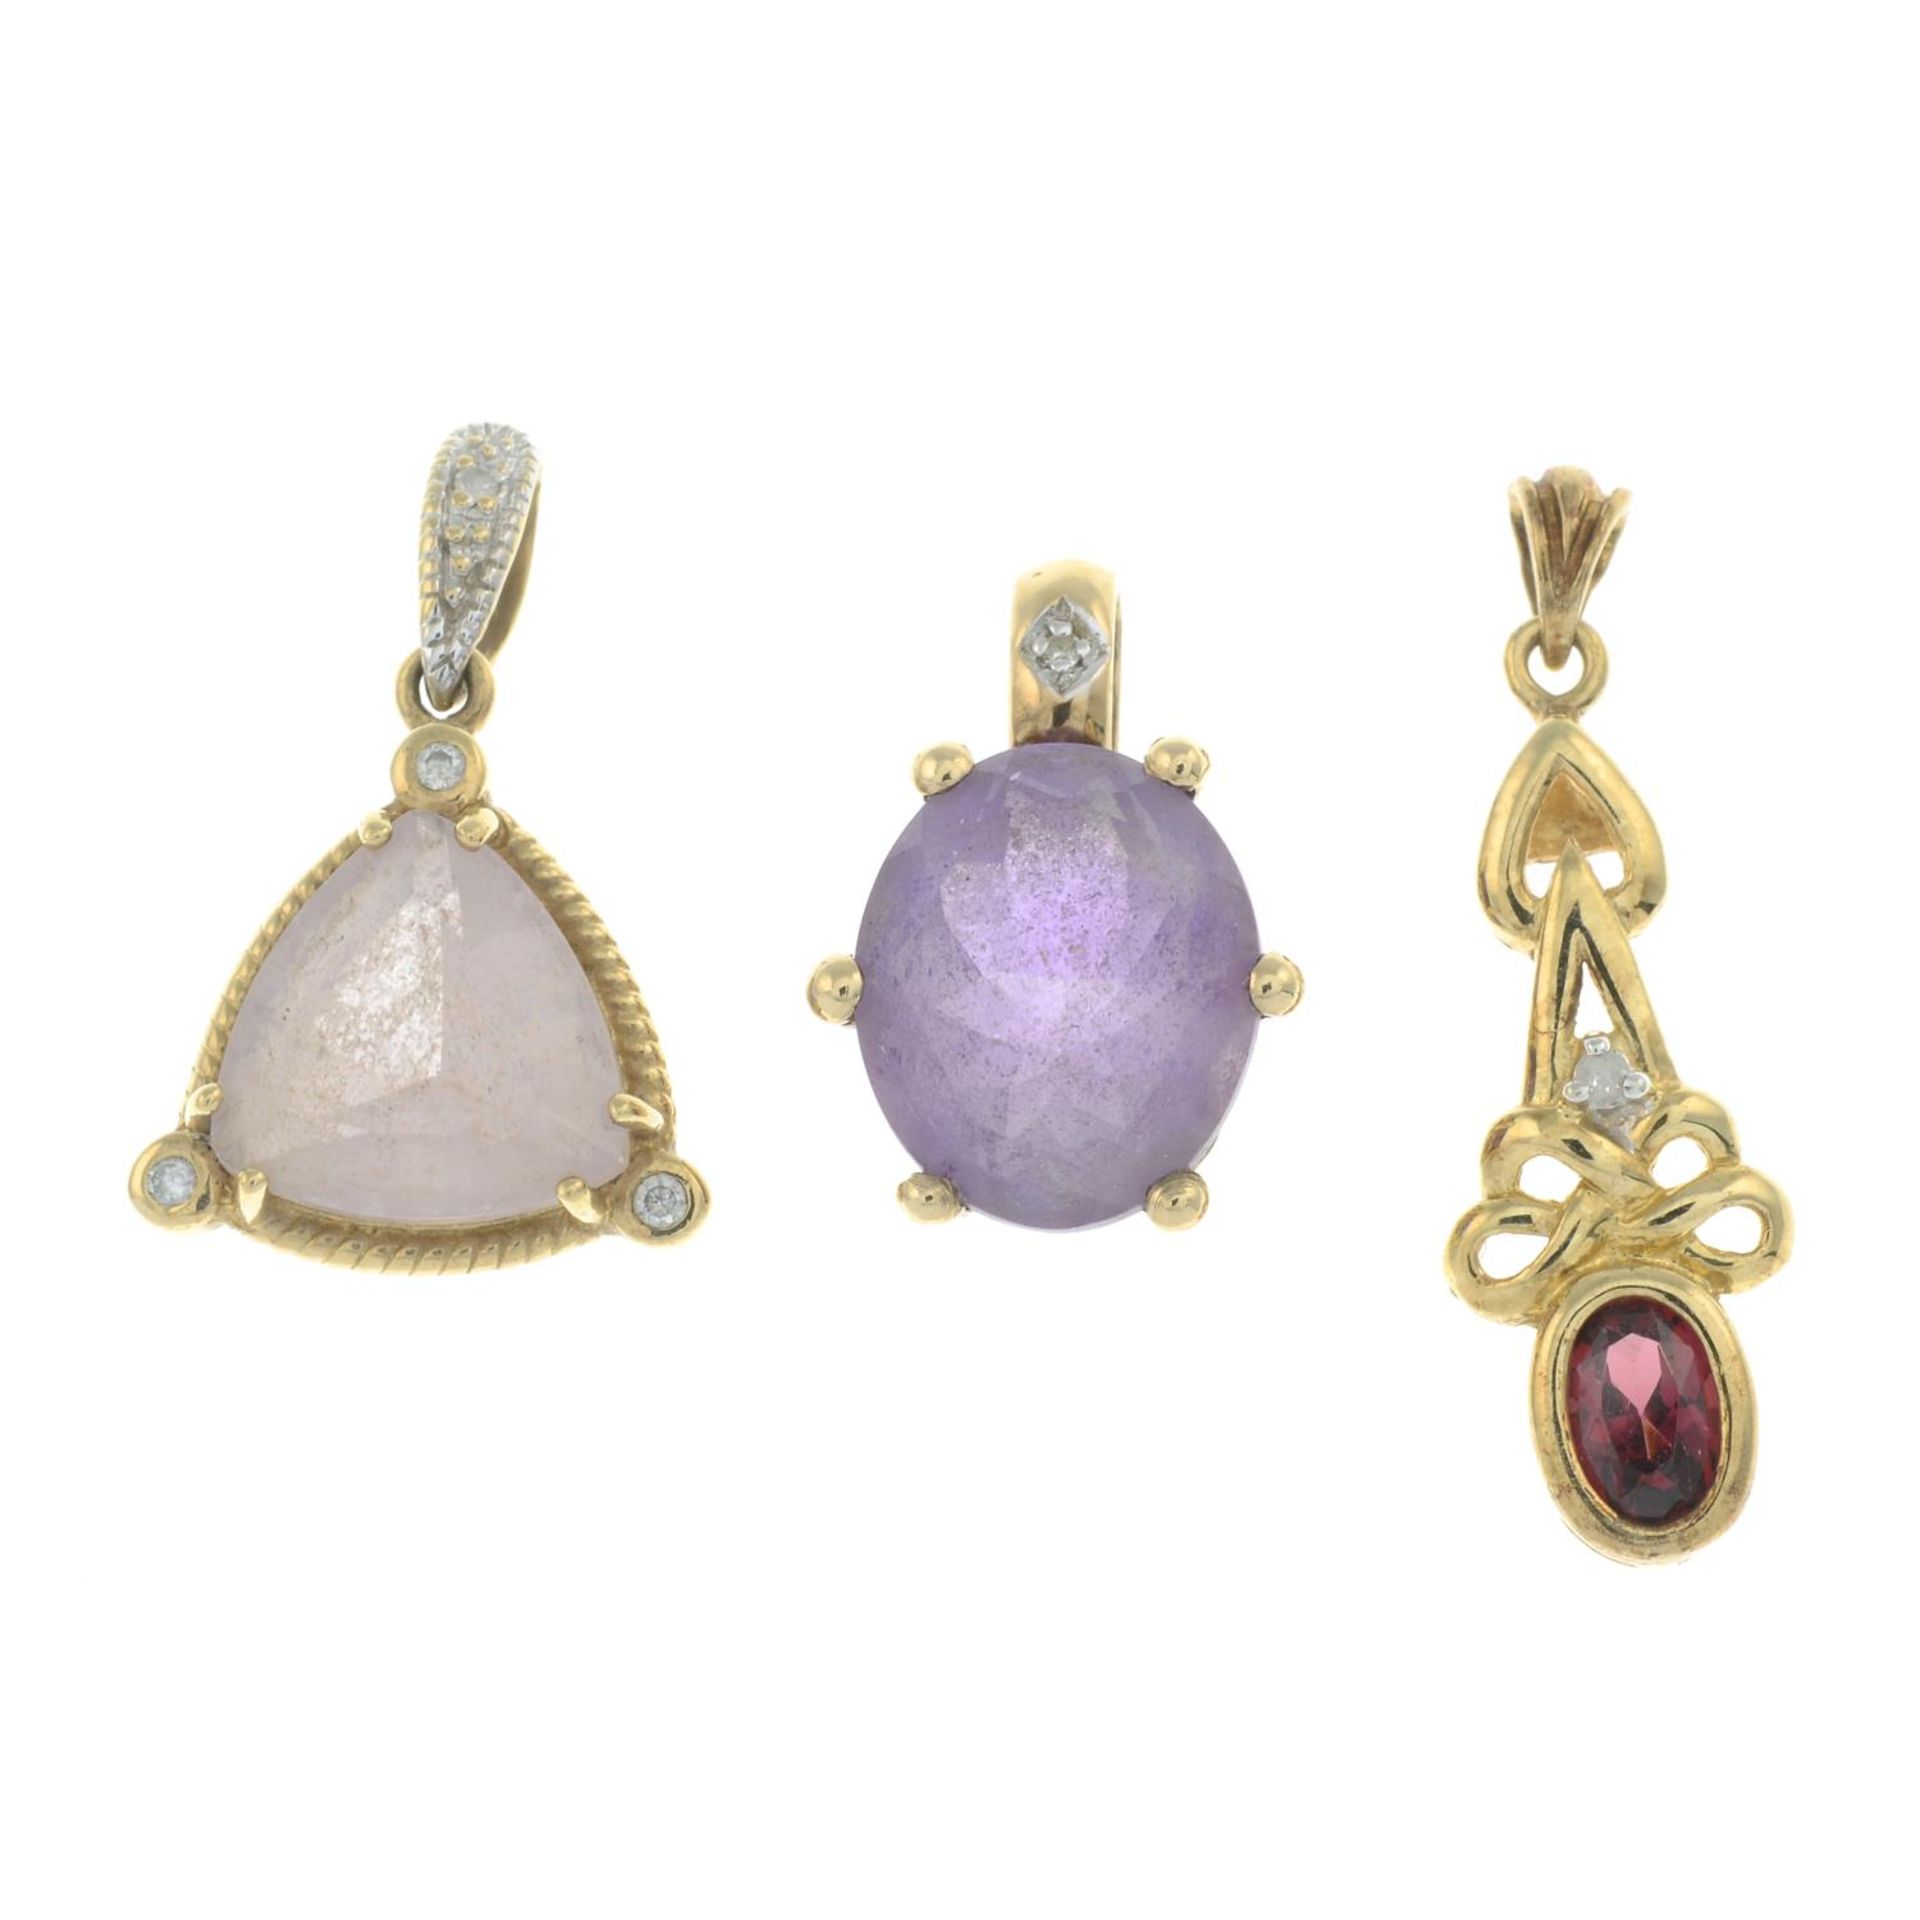 Eight gem-set pendants and a gem-set necklace.